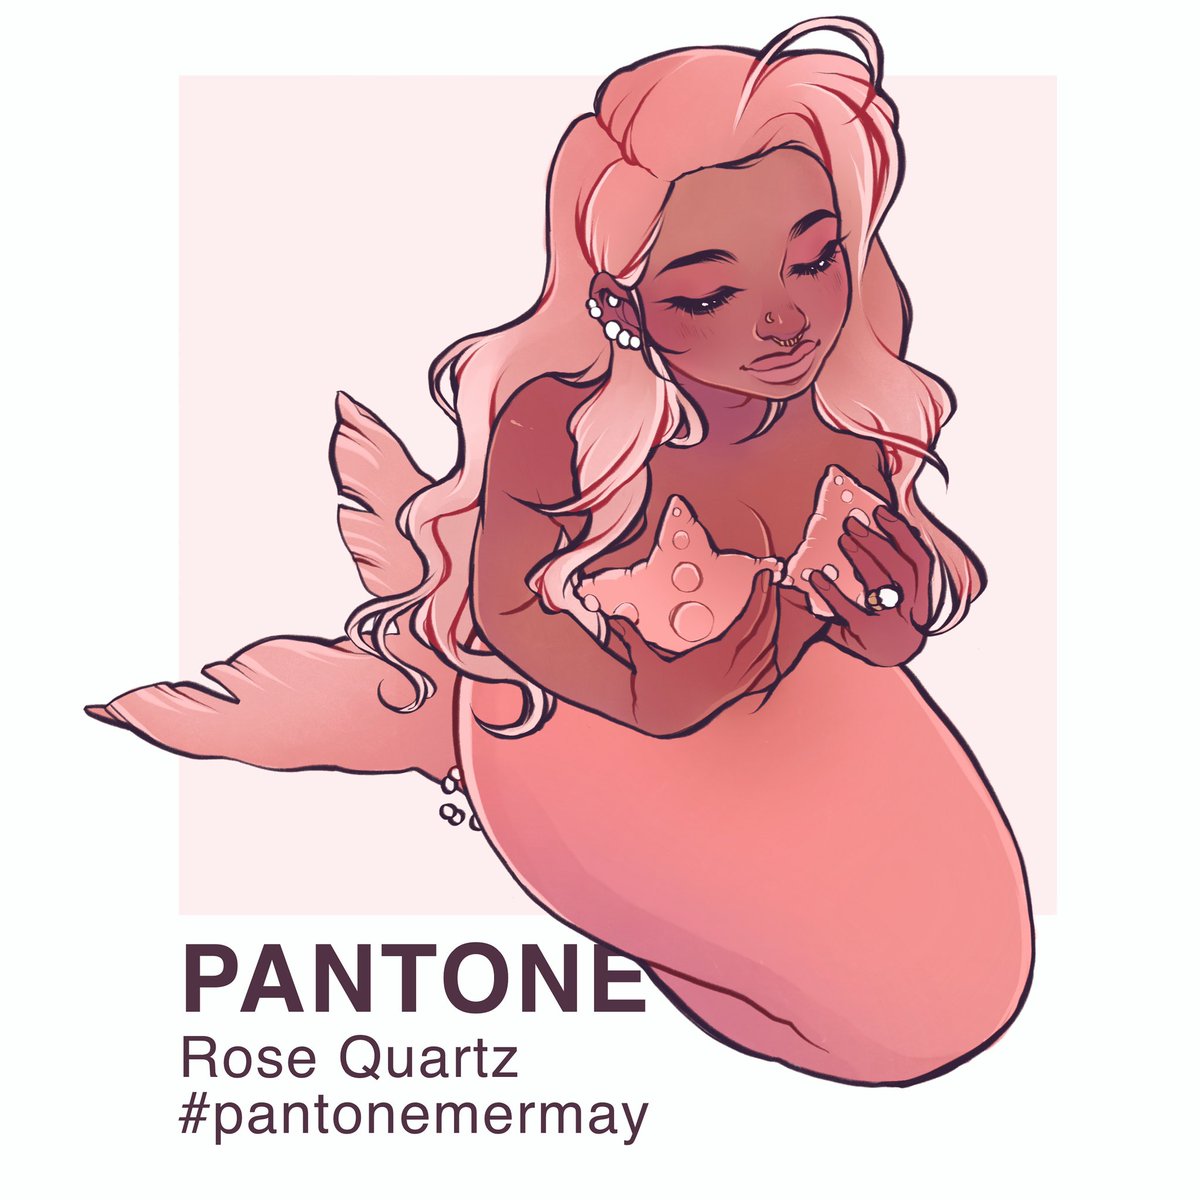 Rose Quartz✨
#pantonemermay #mermay